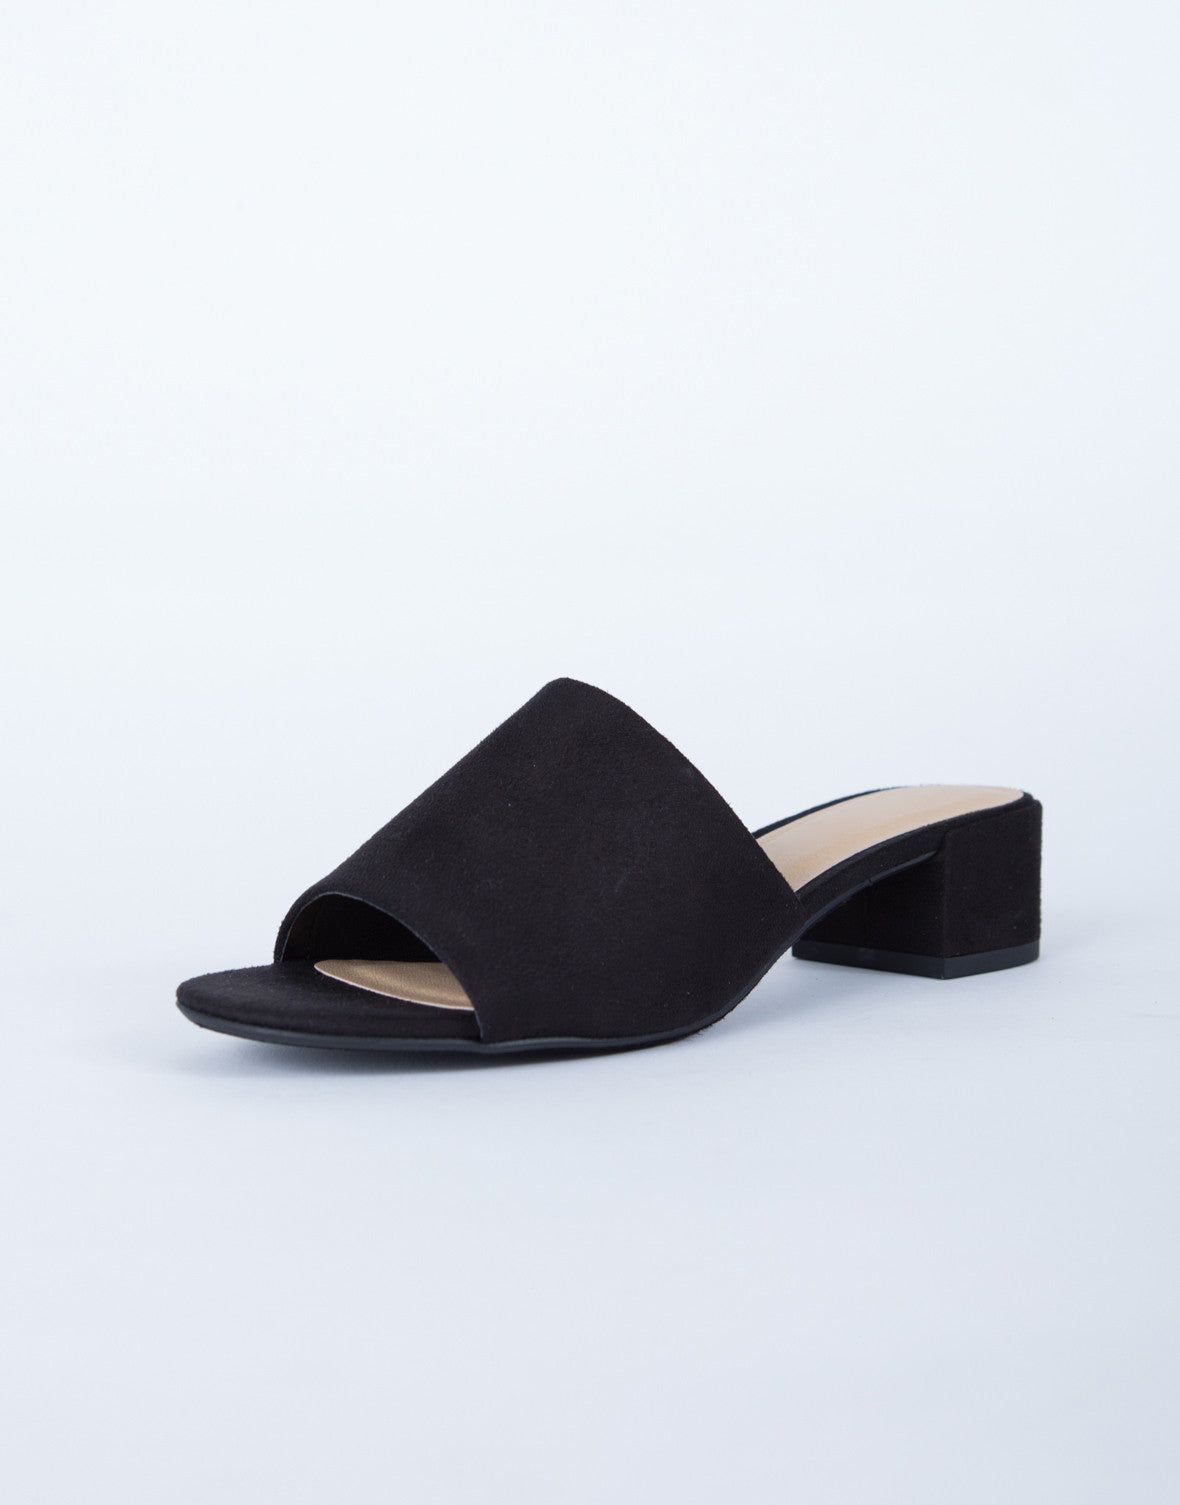 mule sandals black